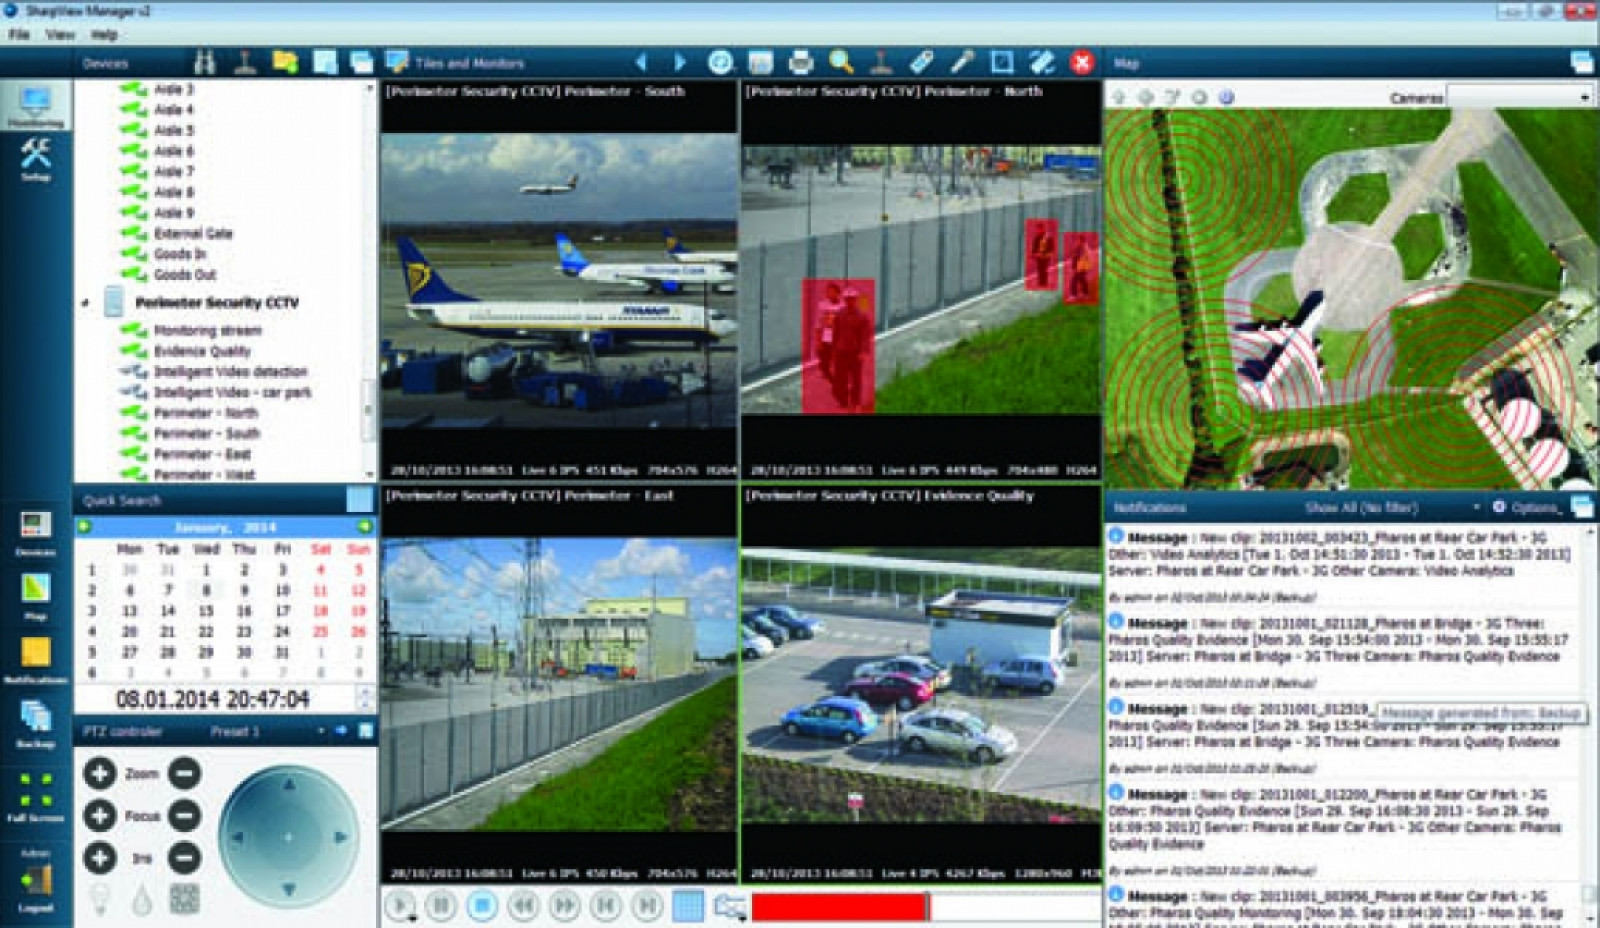 Radar-controlled CCTV heralds guardless site secur...